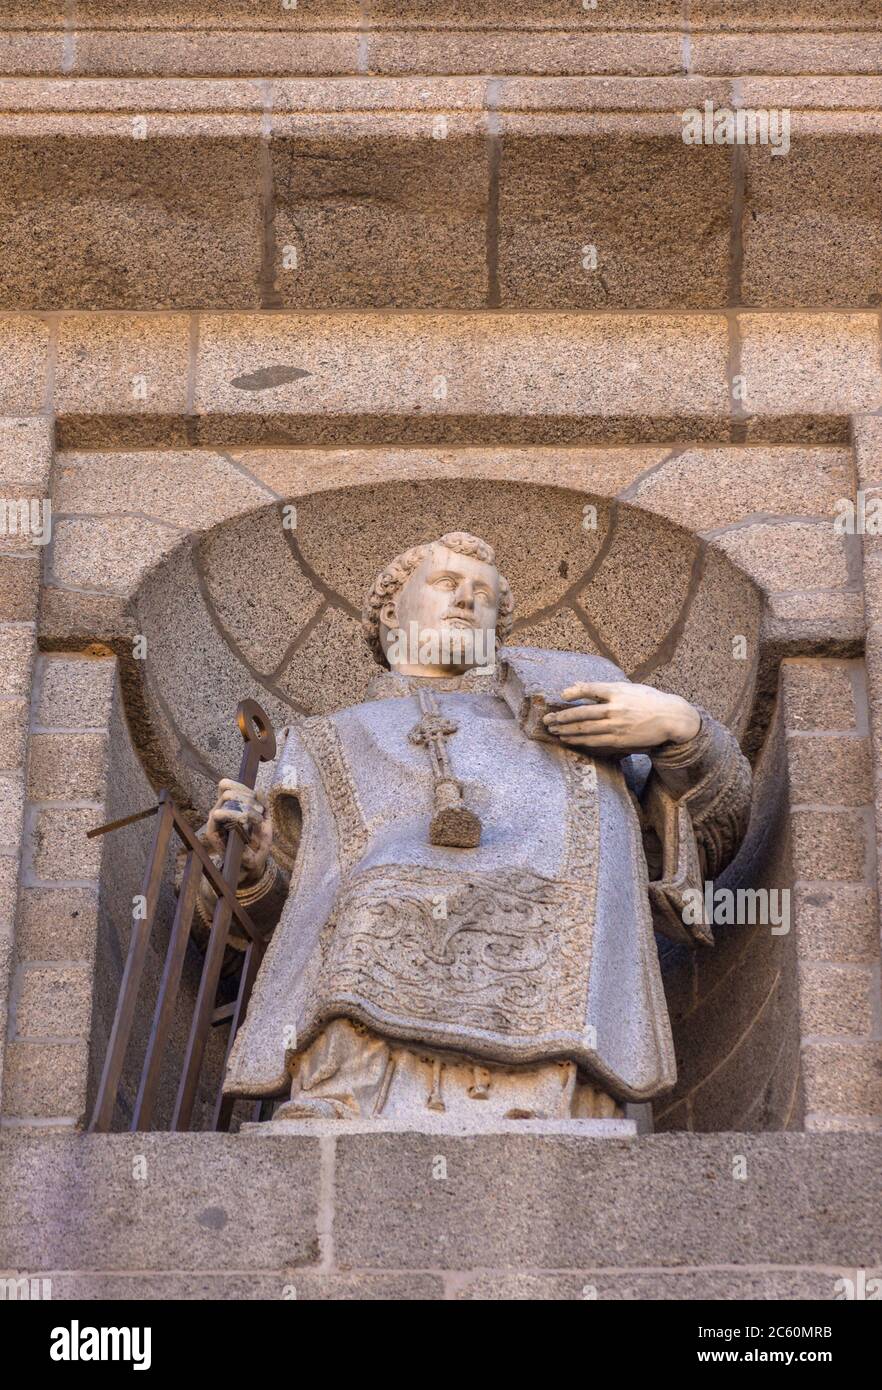 Real Monasterio de San Lorenzo de El Escorial. Madrid. España. Stockfoto